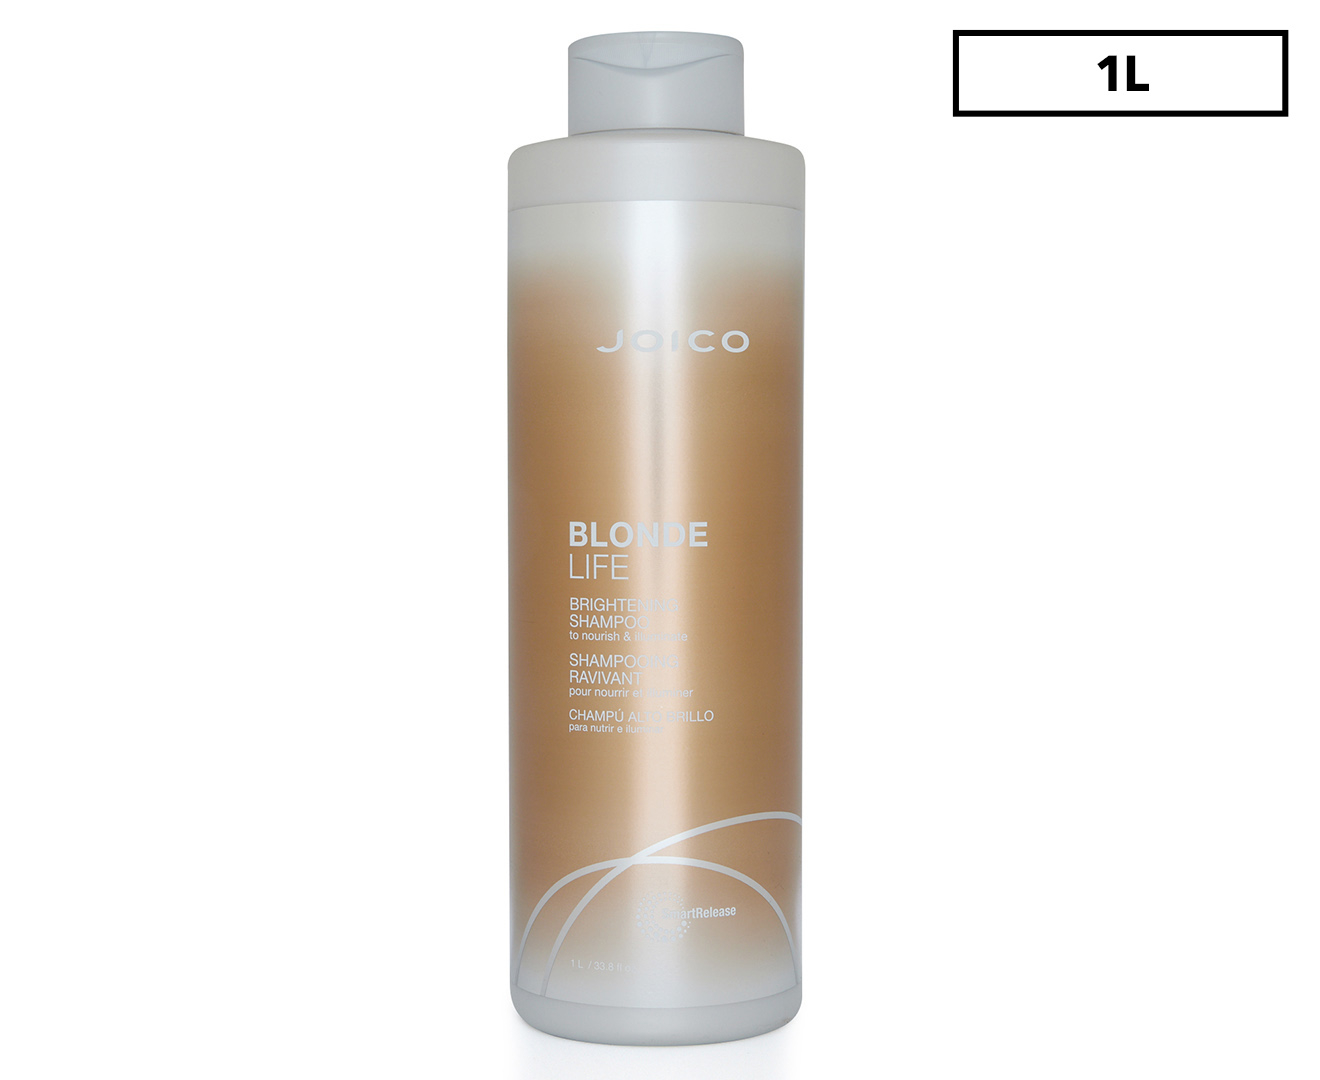 5. Joico Blonde Life Brightening Shampoo - wide 9